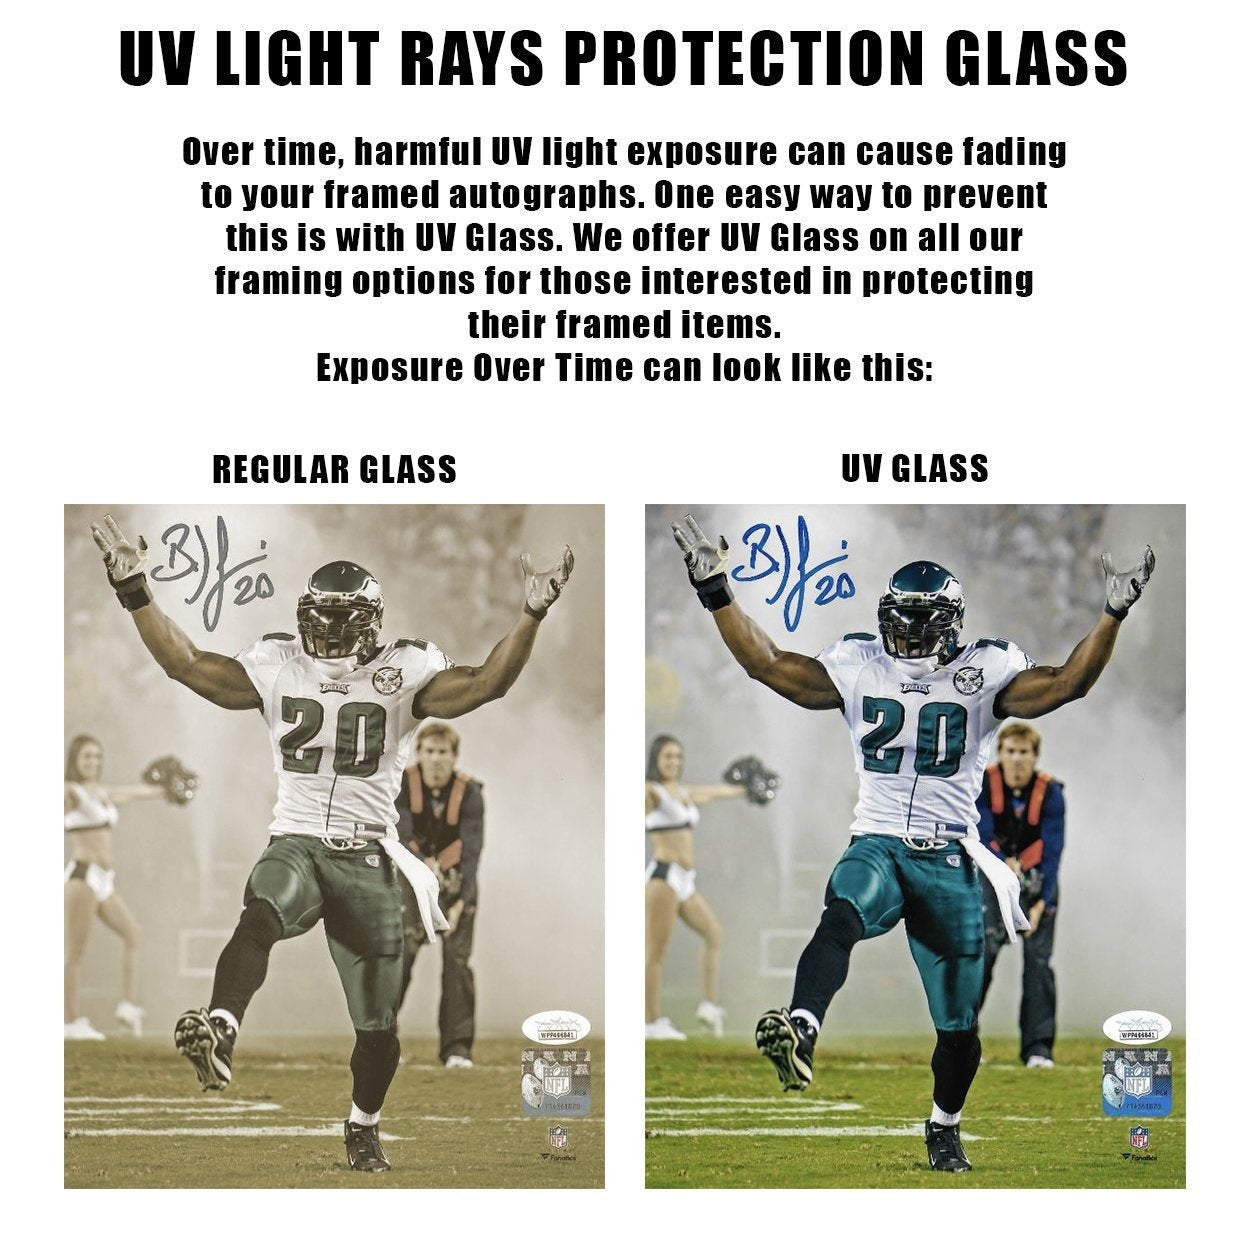 Las Vegas Raiders Custom NFL Football 11x14 Picture Frame Kit (Multiple Colors) - Dynasty Sports & Framing 